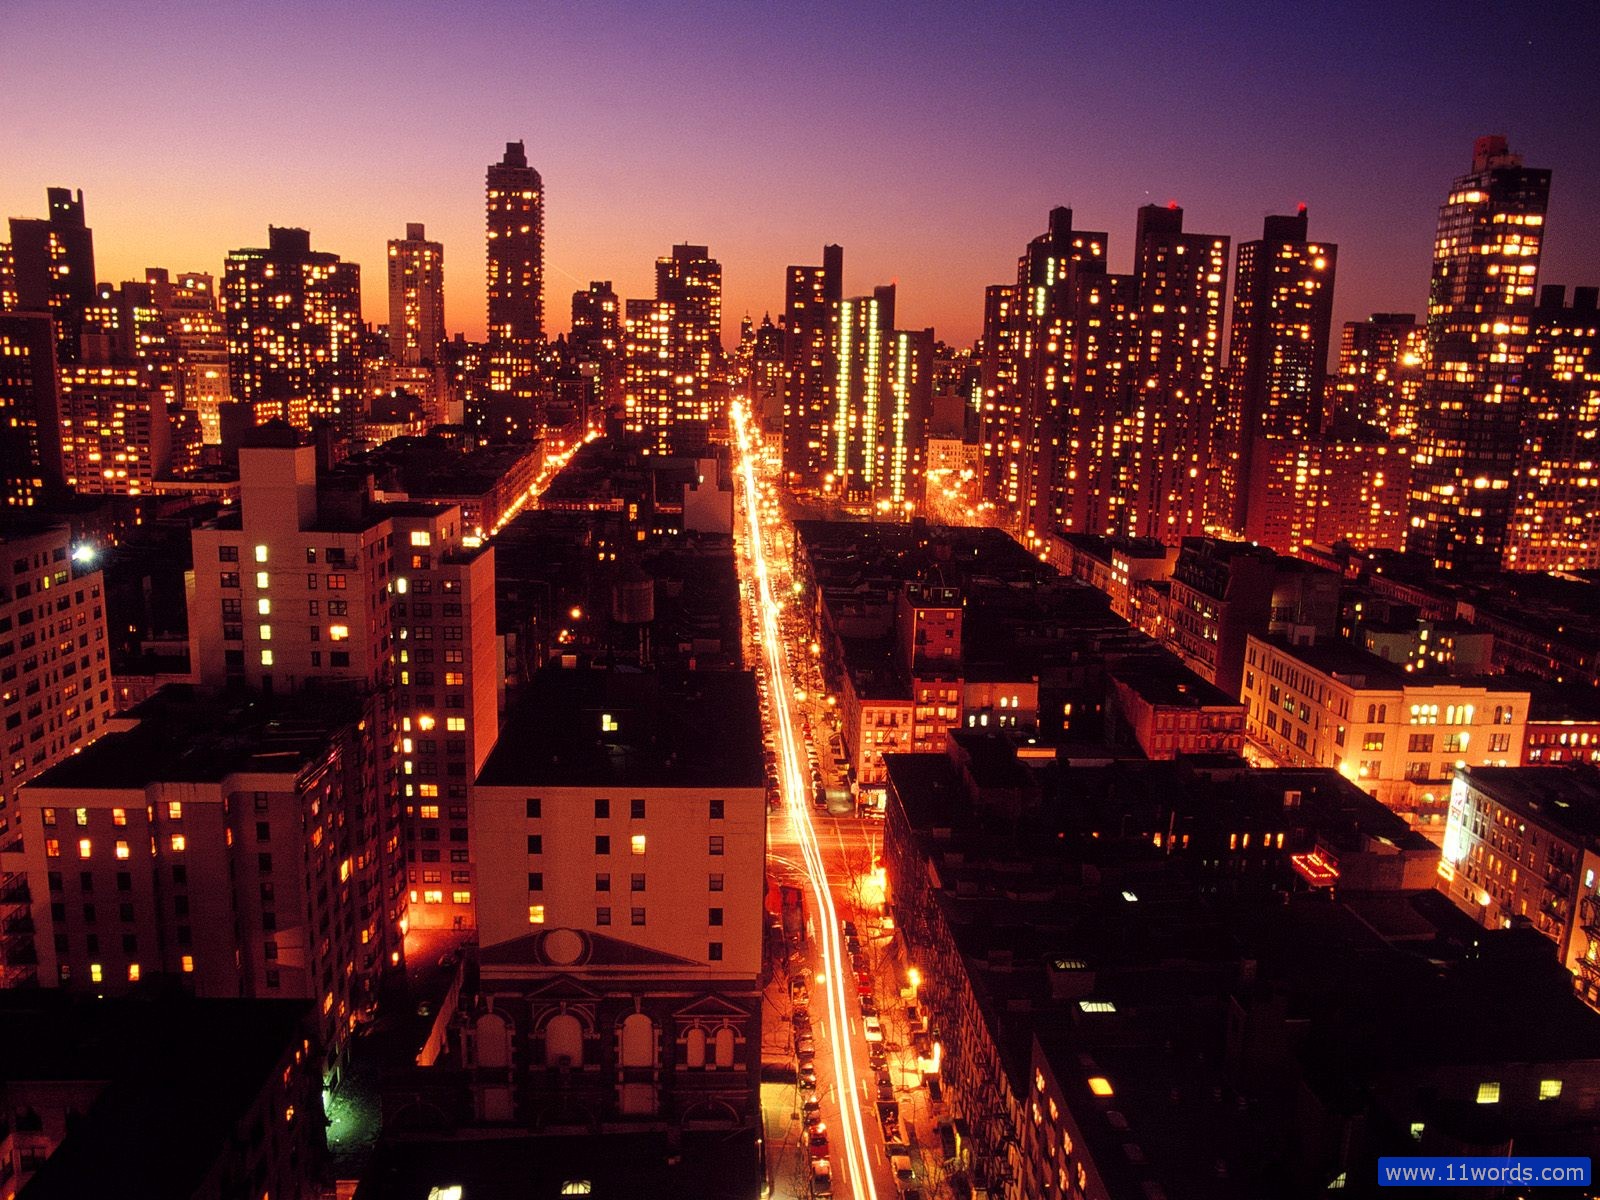 Architectural Wonders - Upper East Side of Manhattan, New York - 1600x1200 - ID 43818 - PREMIUM.jpg